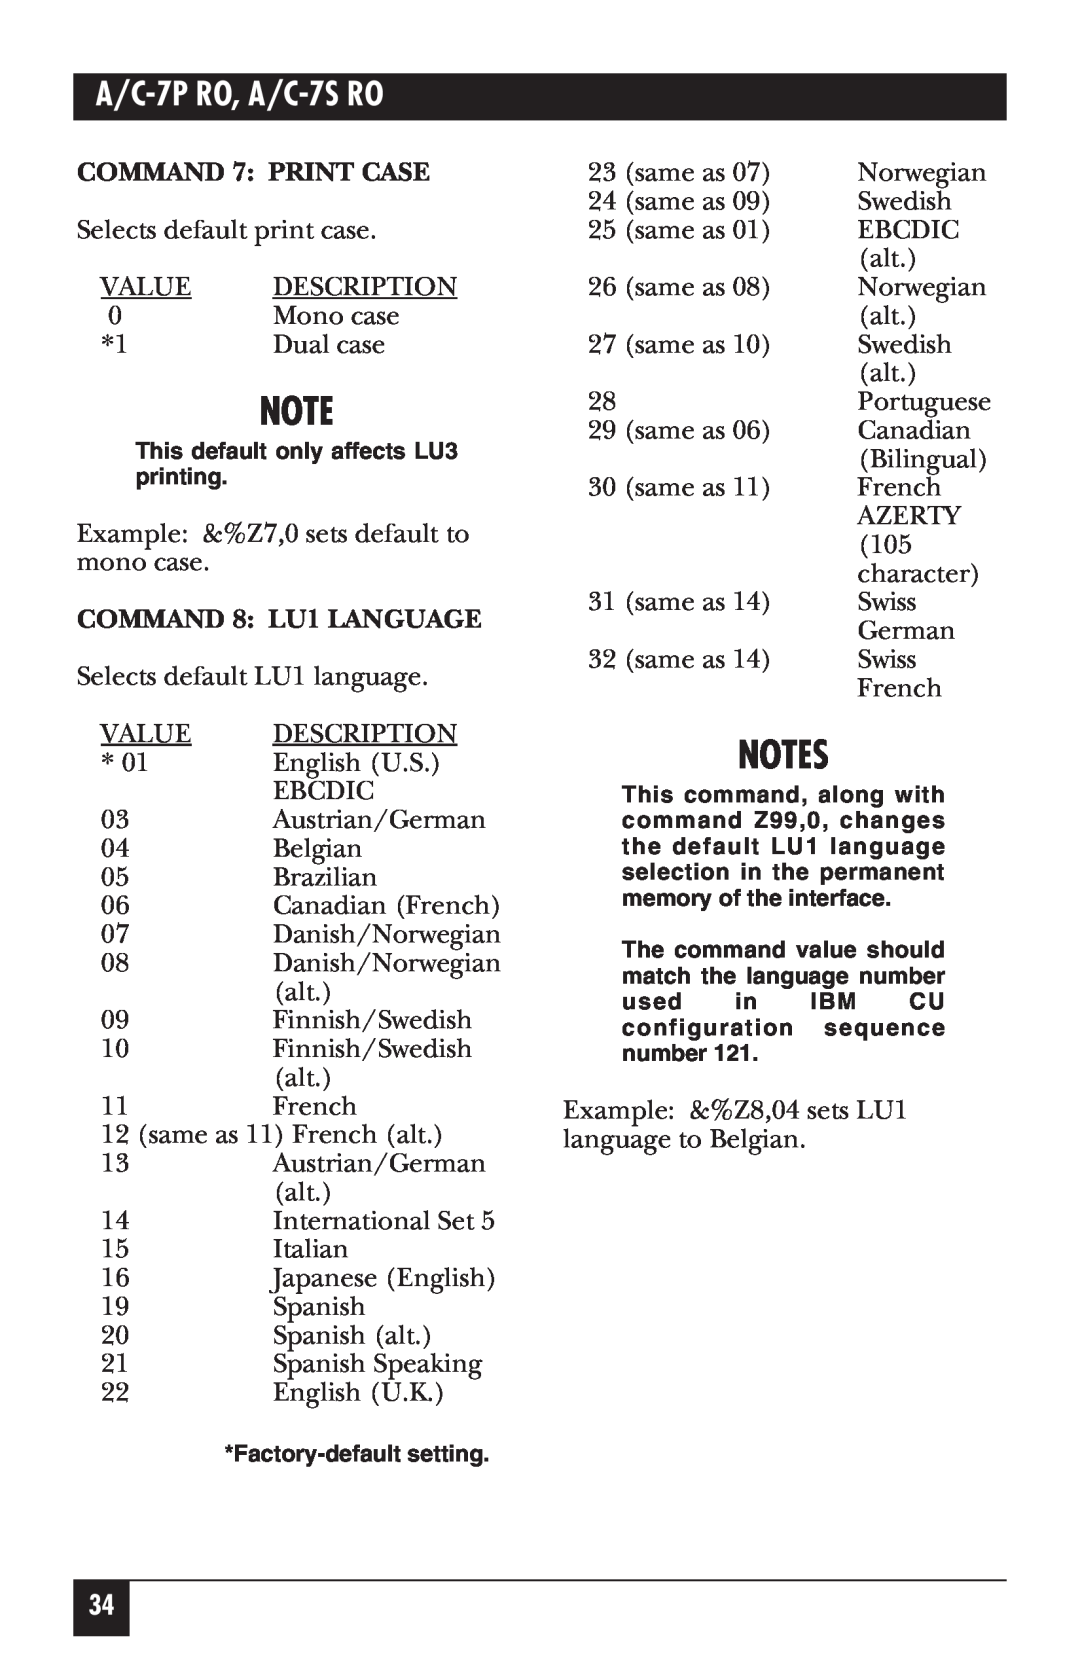 Black Box manual COMMAND 7 PRINT CASE, COMMAND 8 LU1 LANGUAGE, A/C-7P RO, A/C-7S RO 